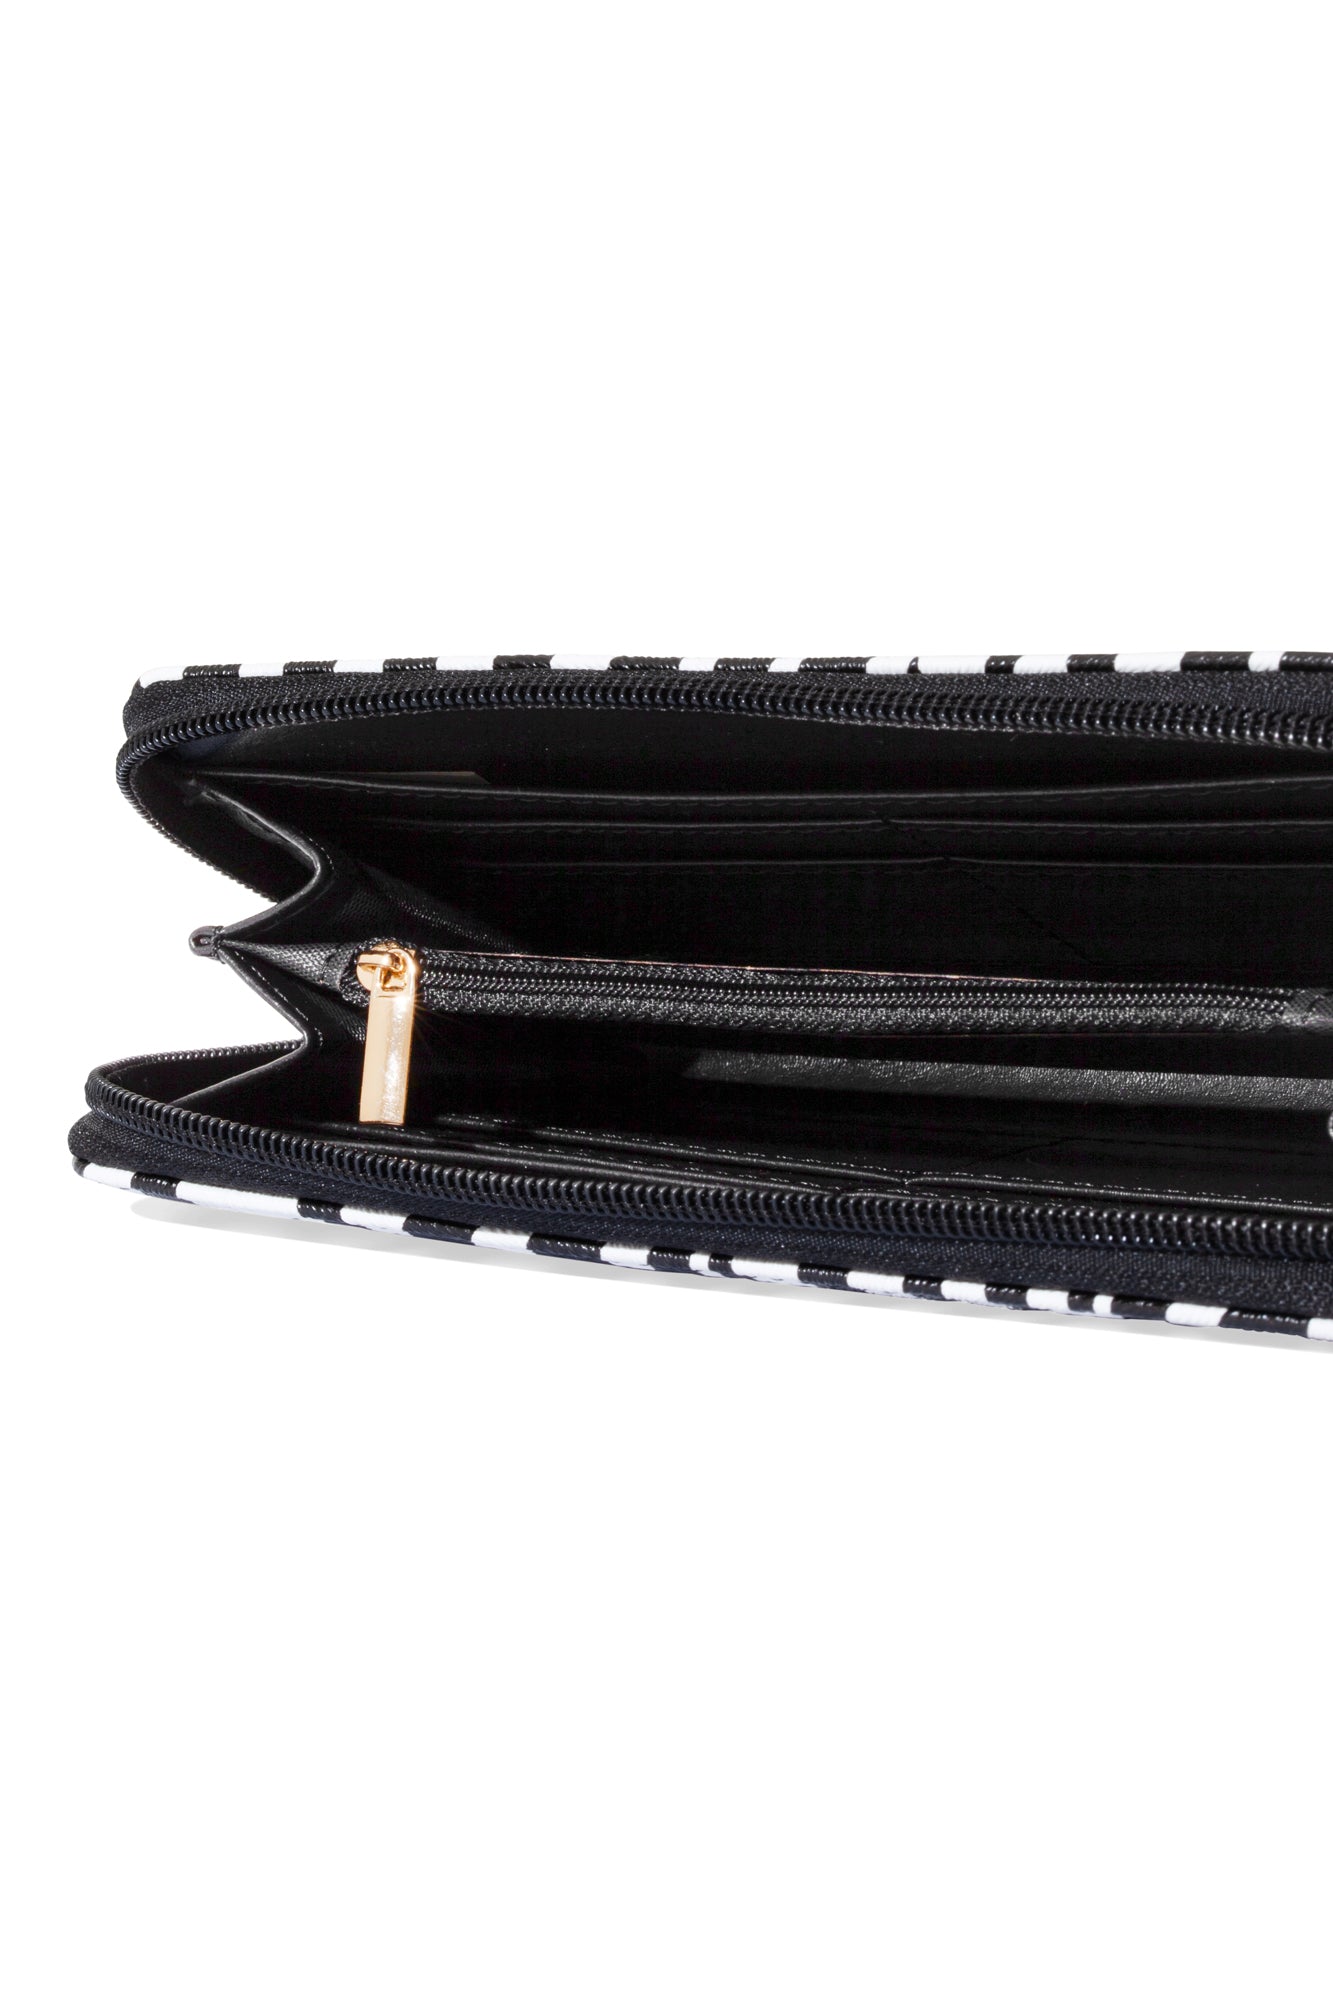 Black interior of zebra print zippered wallet with gold zips